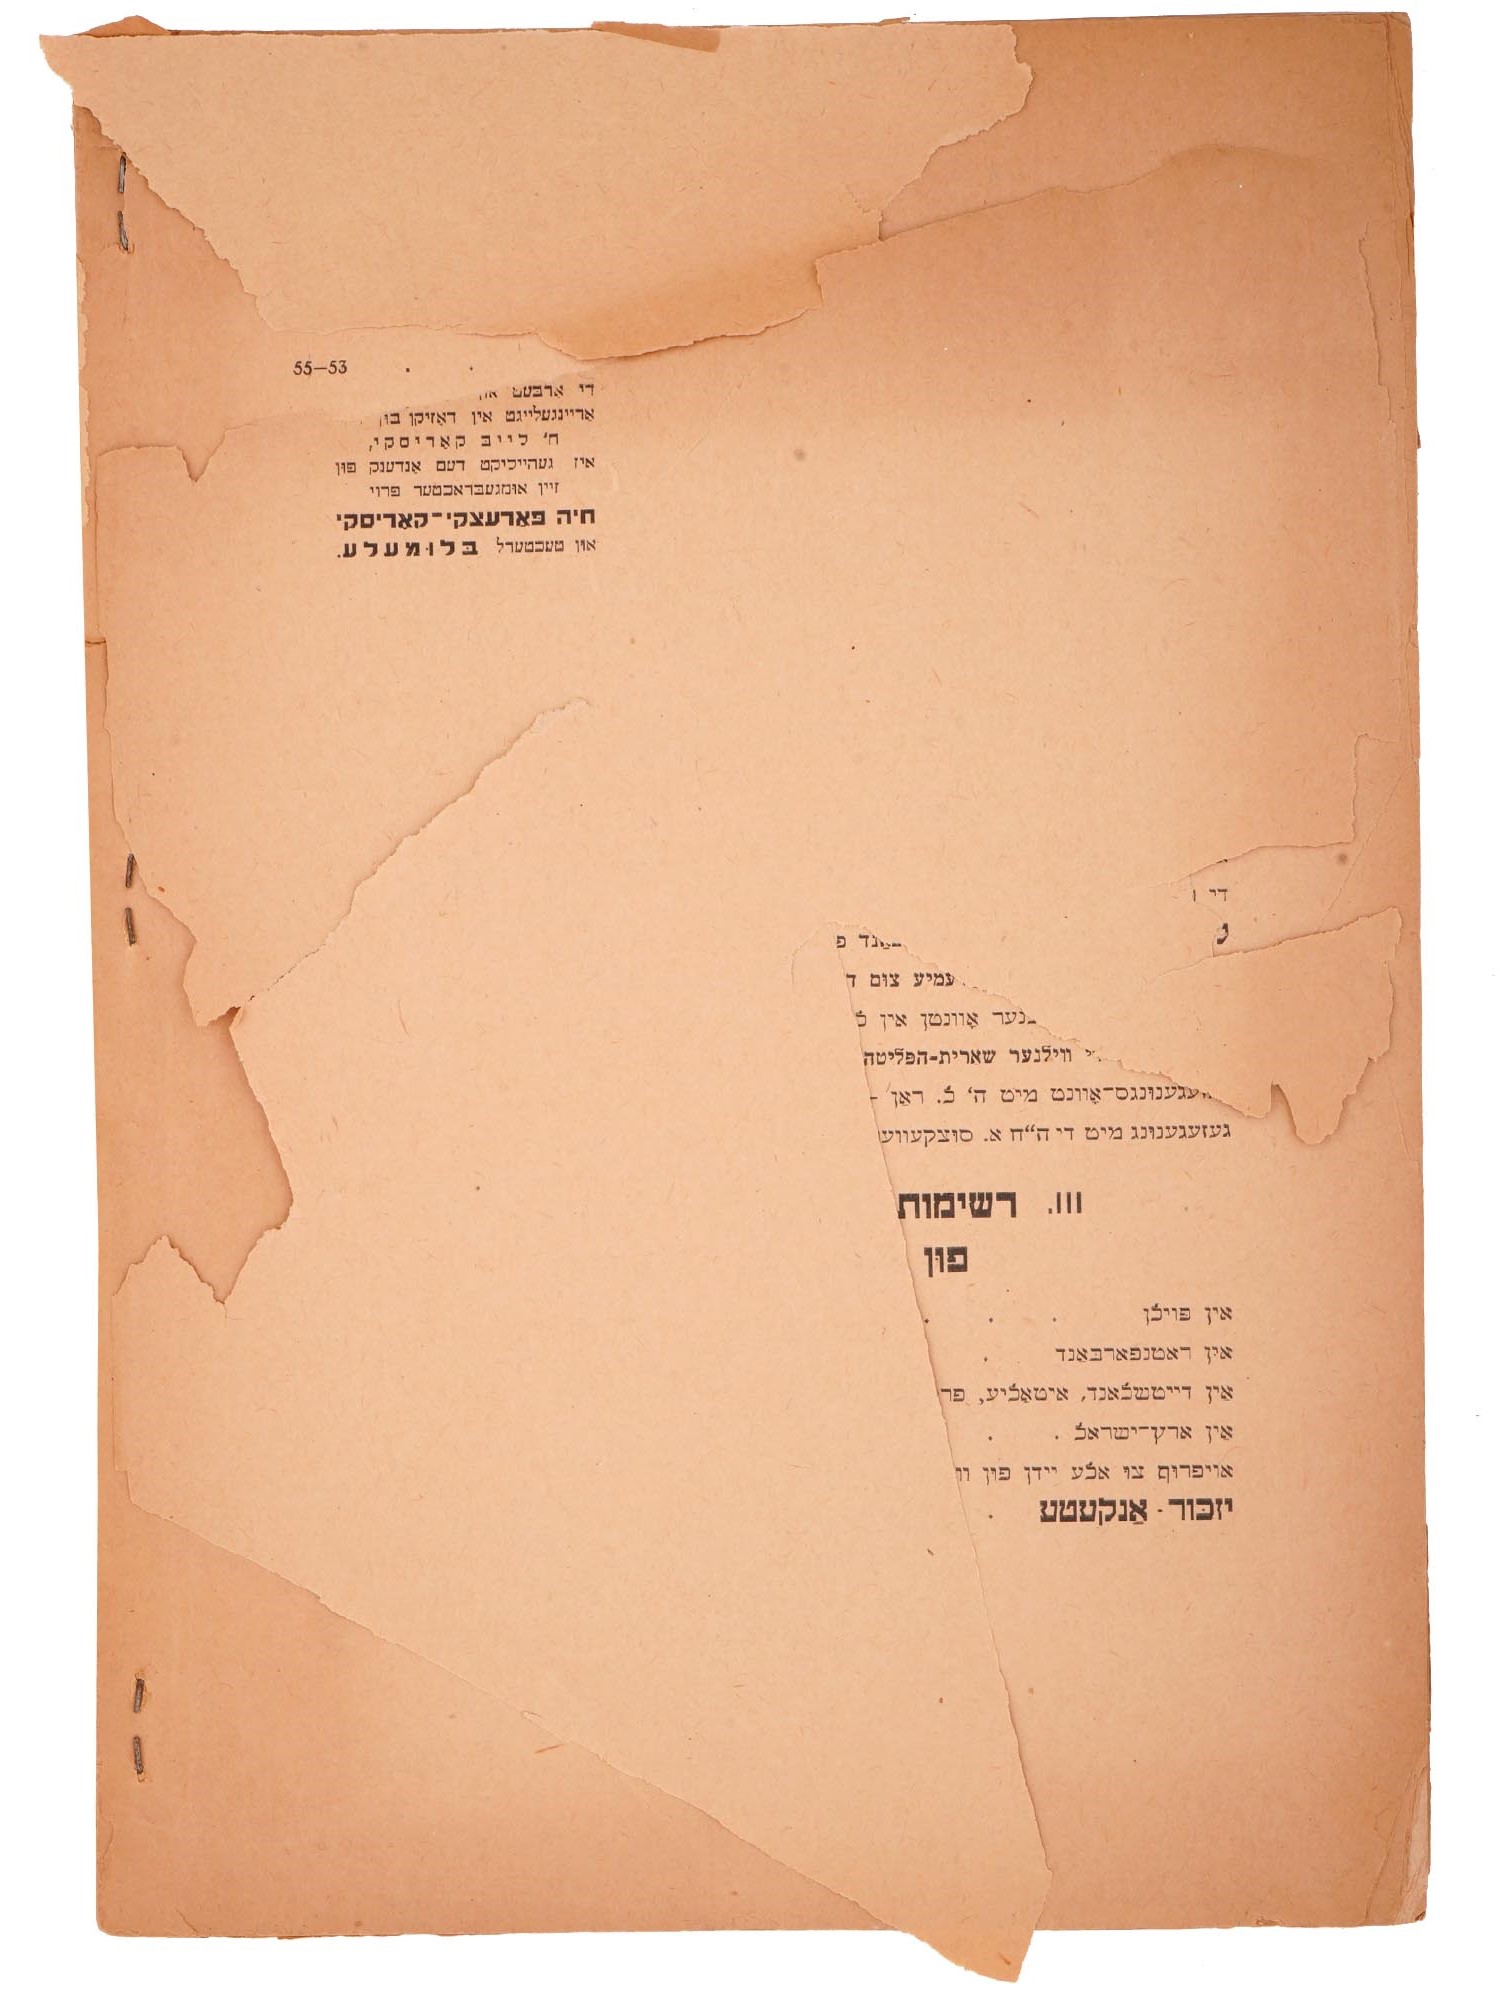 1947 HOLOCAUST MEMORIAL BOOK OF VILNIUS IN YIDDISH PIC-1